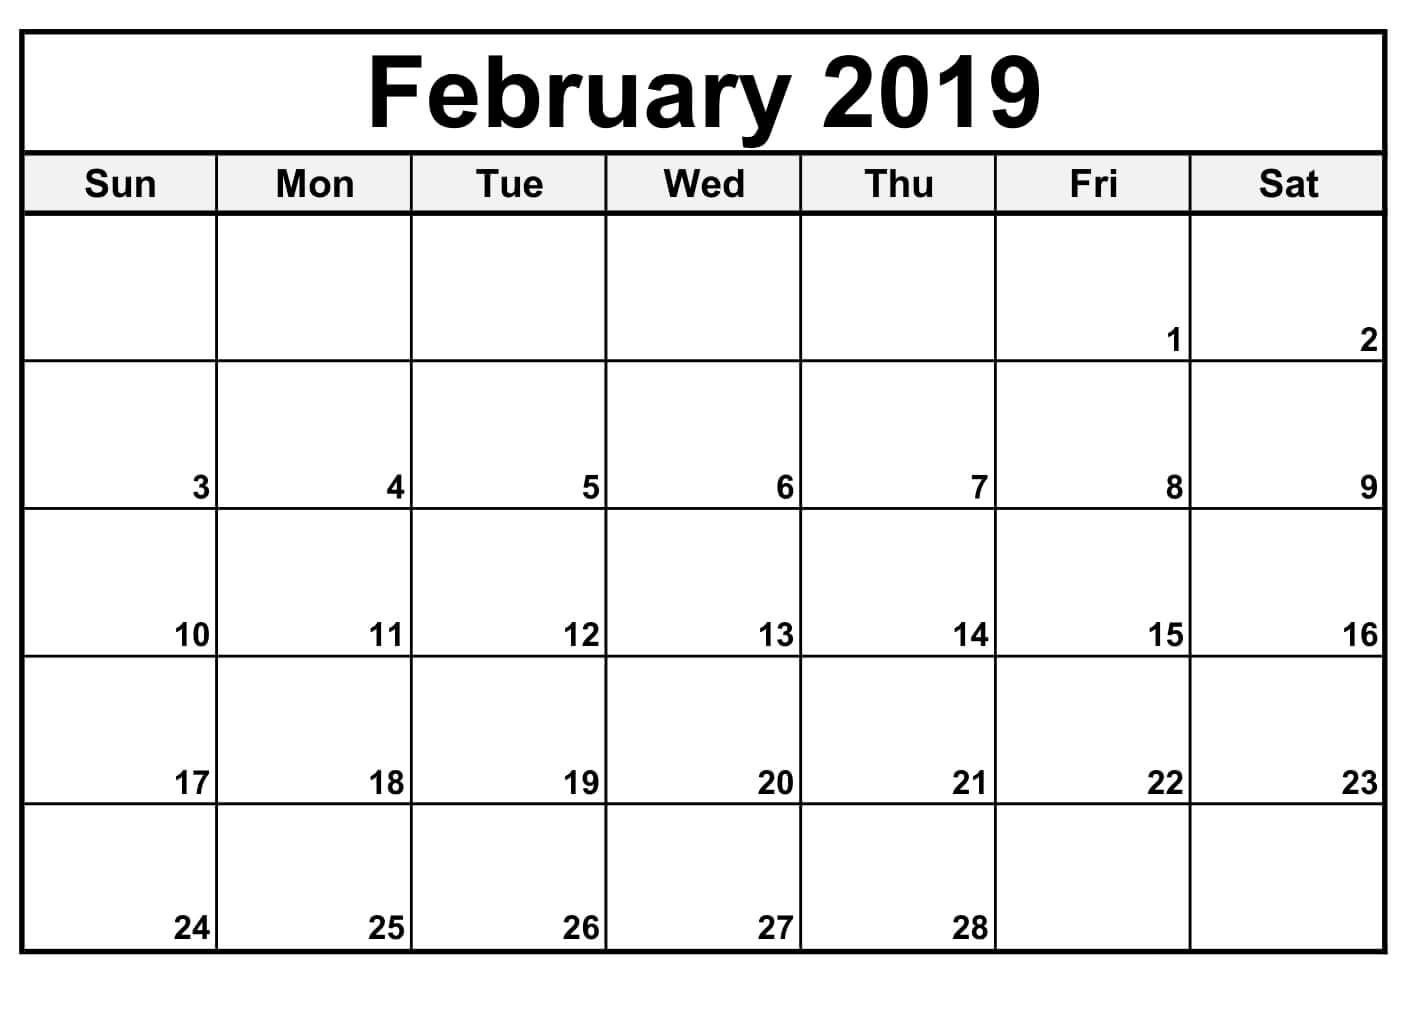 February 2019 Calendar Editable | Blank Calendar Template Dashing Monthly Calendar Template You Can Type In